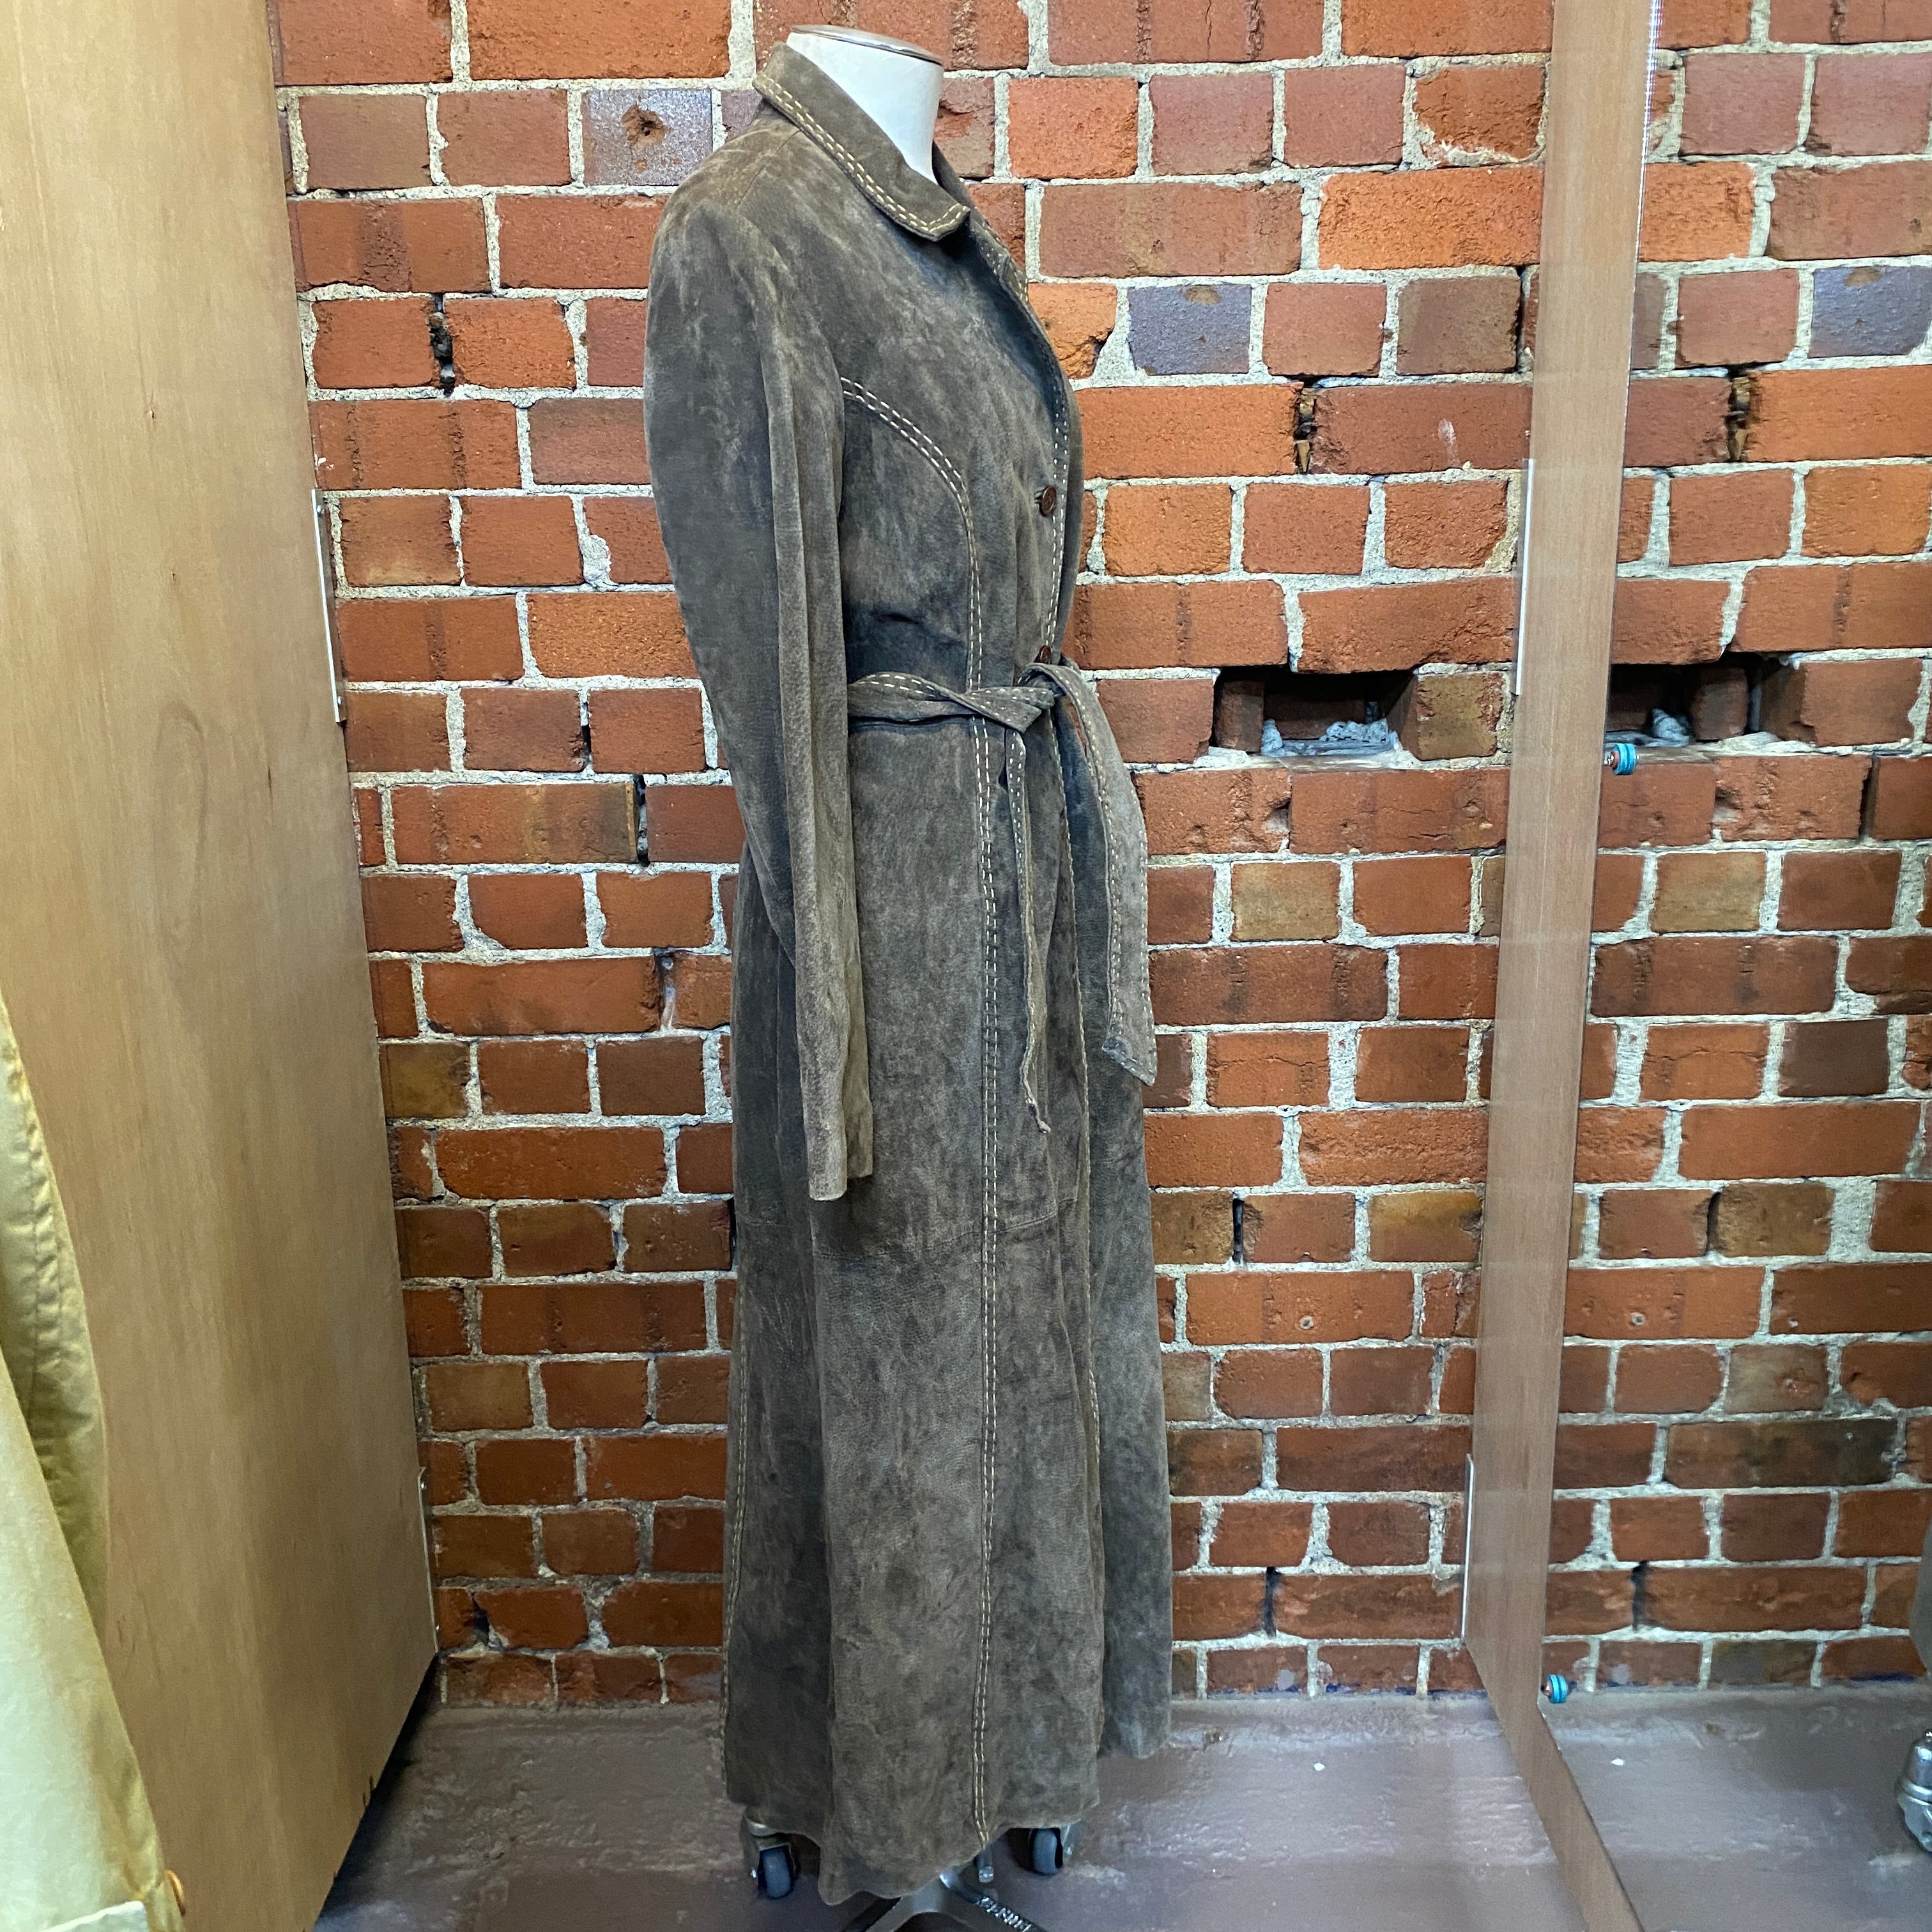 SUEDE maxi length coat